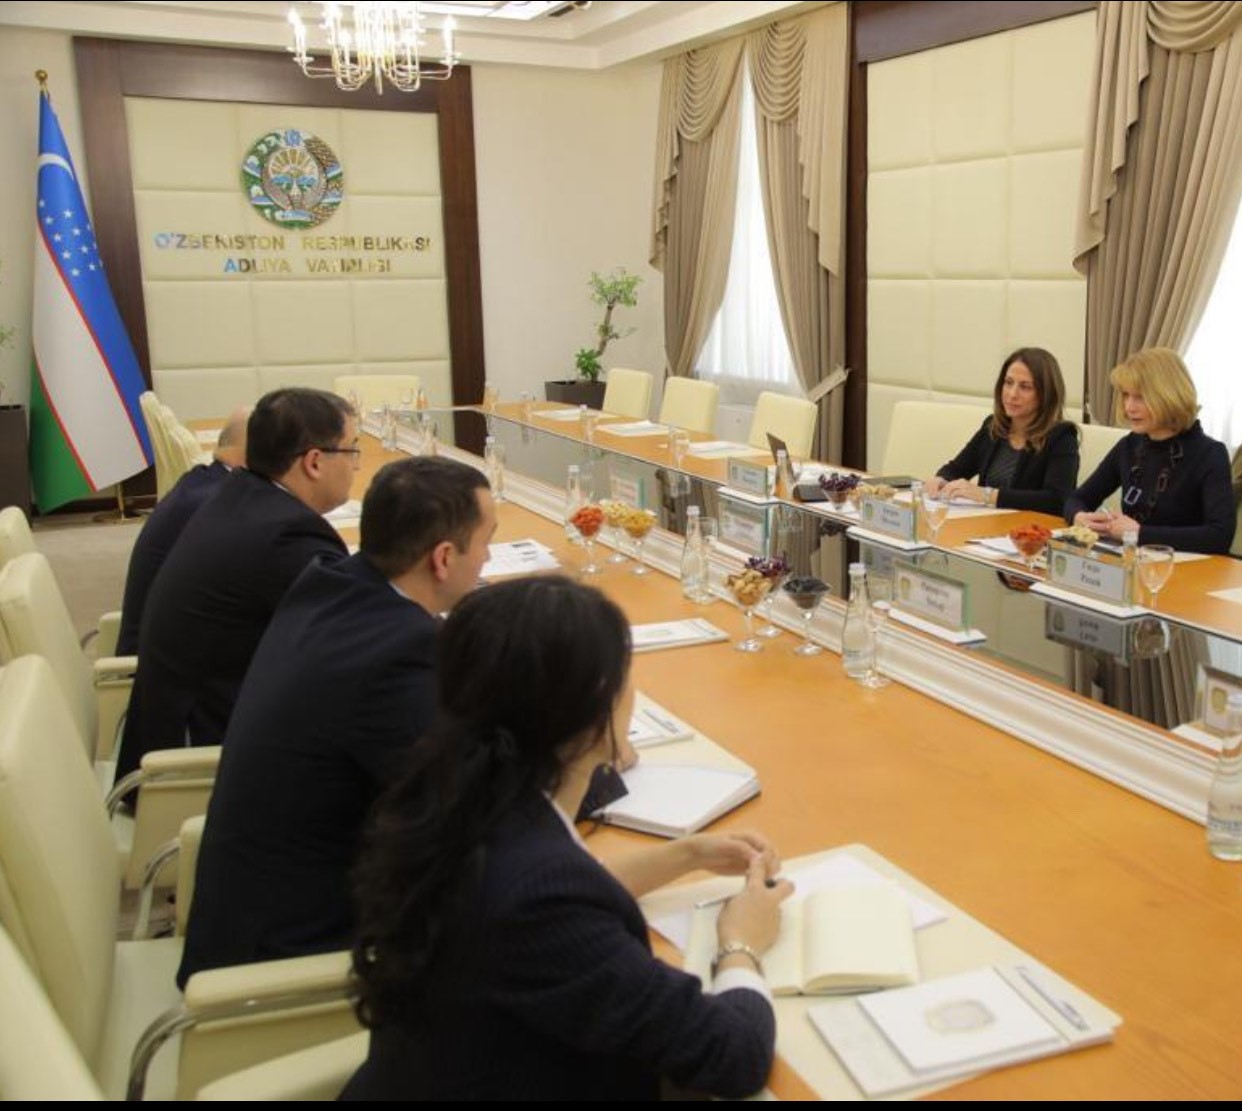 ULaw in Uzbekistan to discuss the establishment of the new International University of Law (IULT)